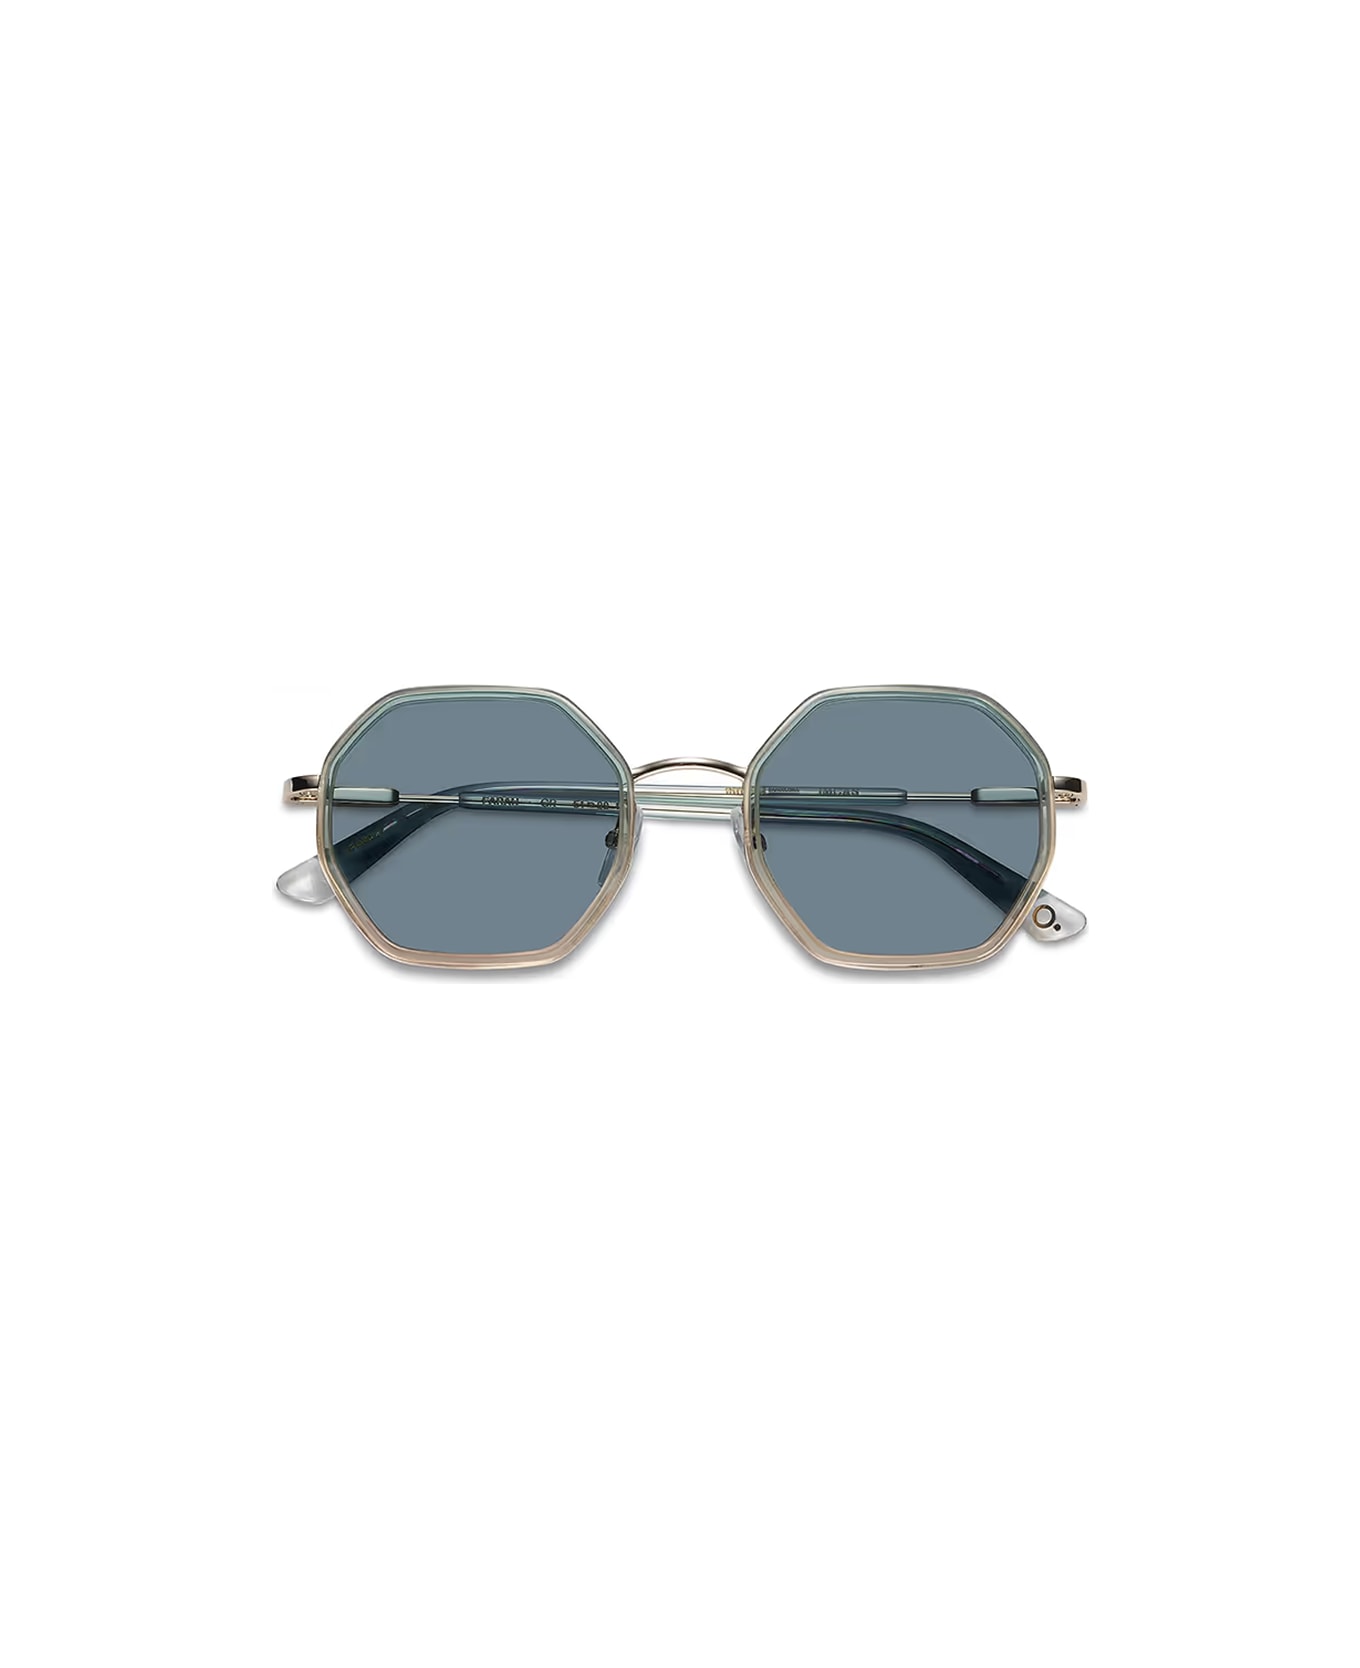 Etnia Barcelona Sunglasses - Grigio/Blu